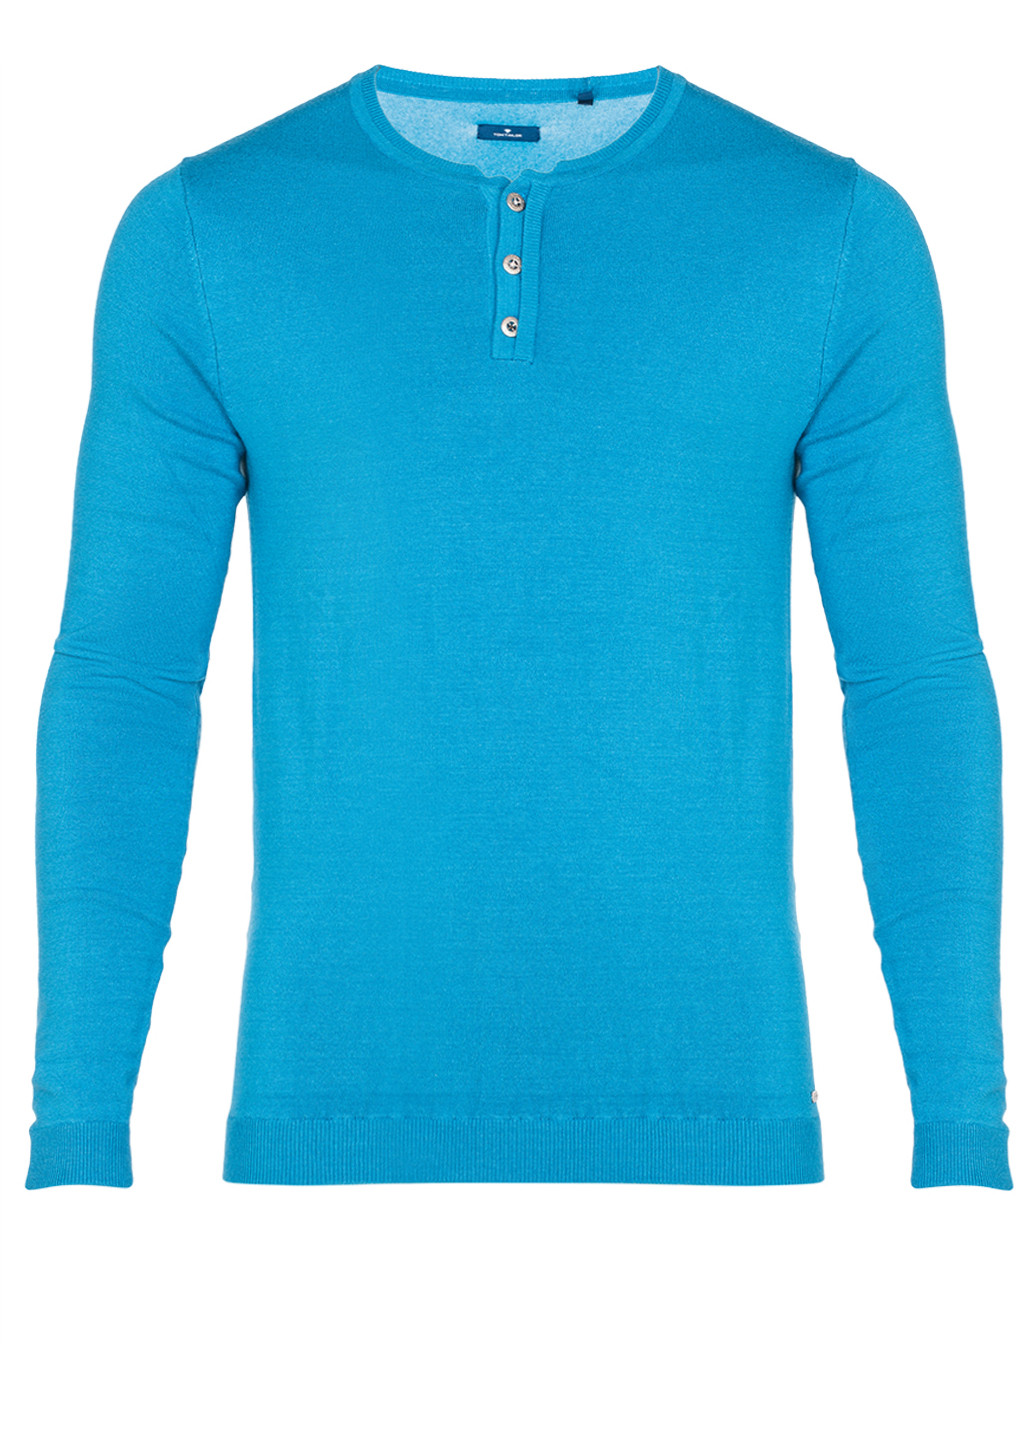 Голубой летний мужской голубой свитер джемпер Tom Tailor